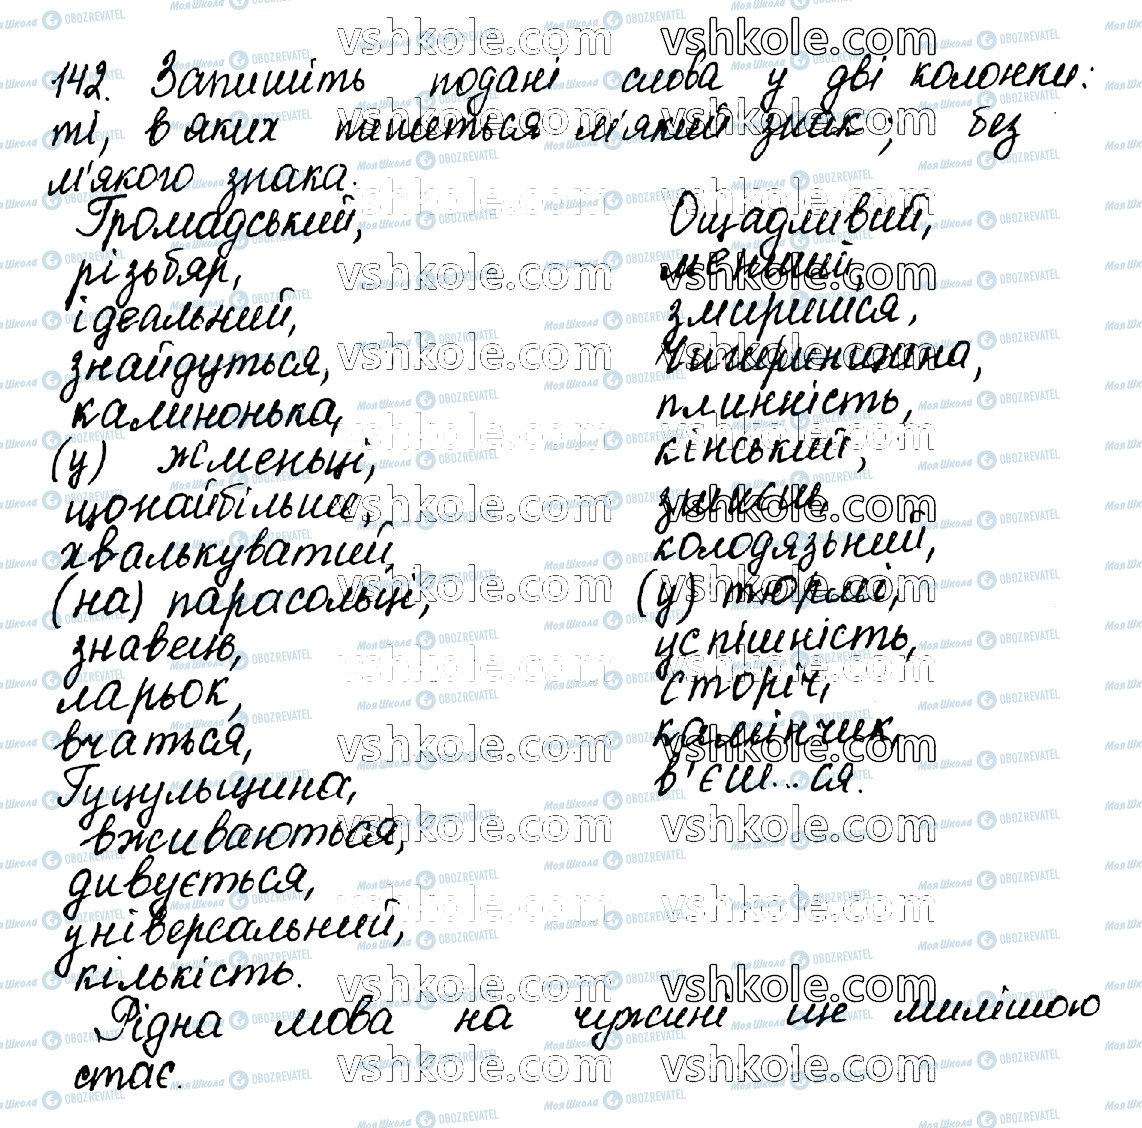 ГДЗ Укр мова 10 класс страница 142